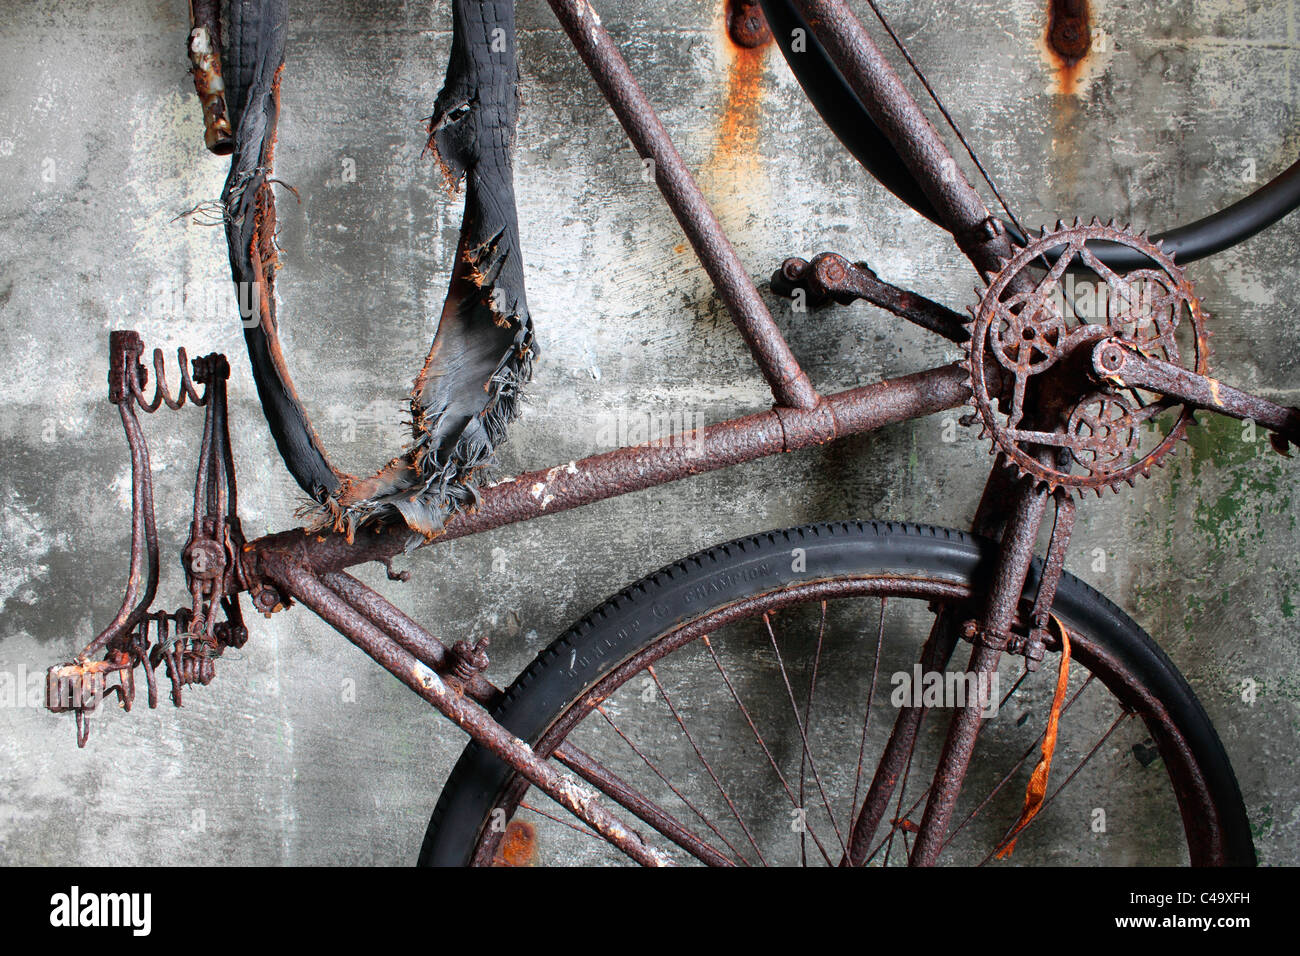 Abandoned ww2 bicycle Stock Photo